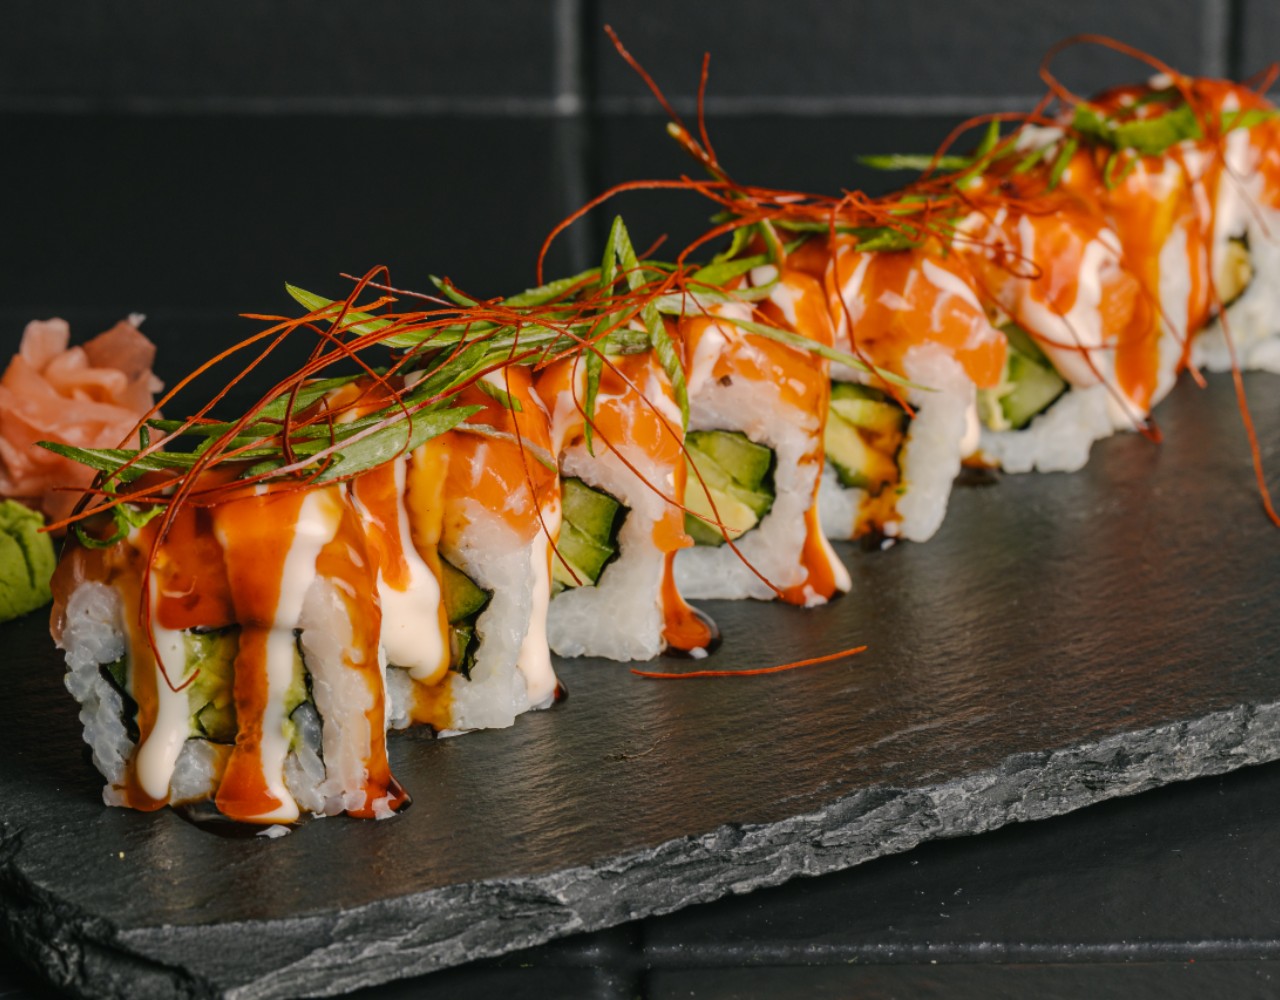 Momo Asian Bar: Το ολοκαίνουργιο sushi spot των νοτίων που αξίζει να ανακαλύψεις